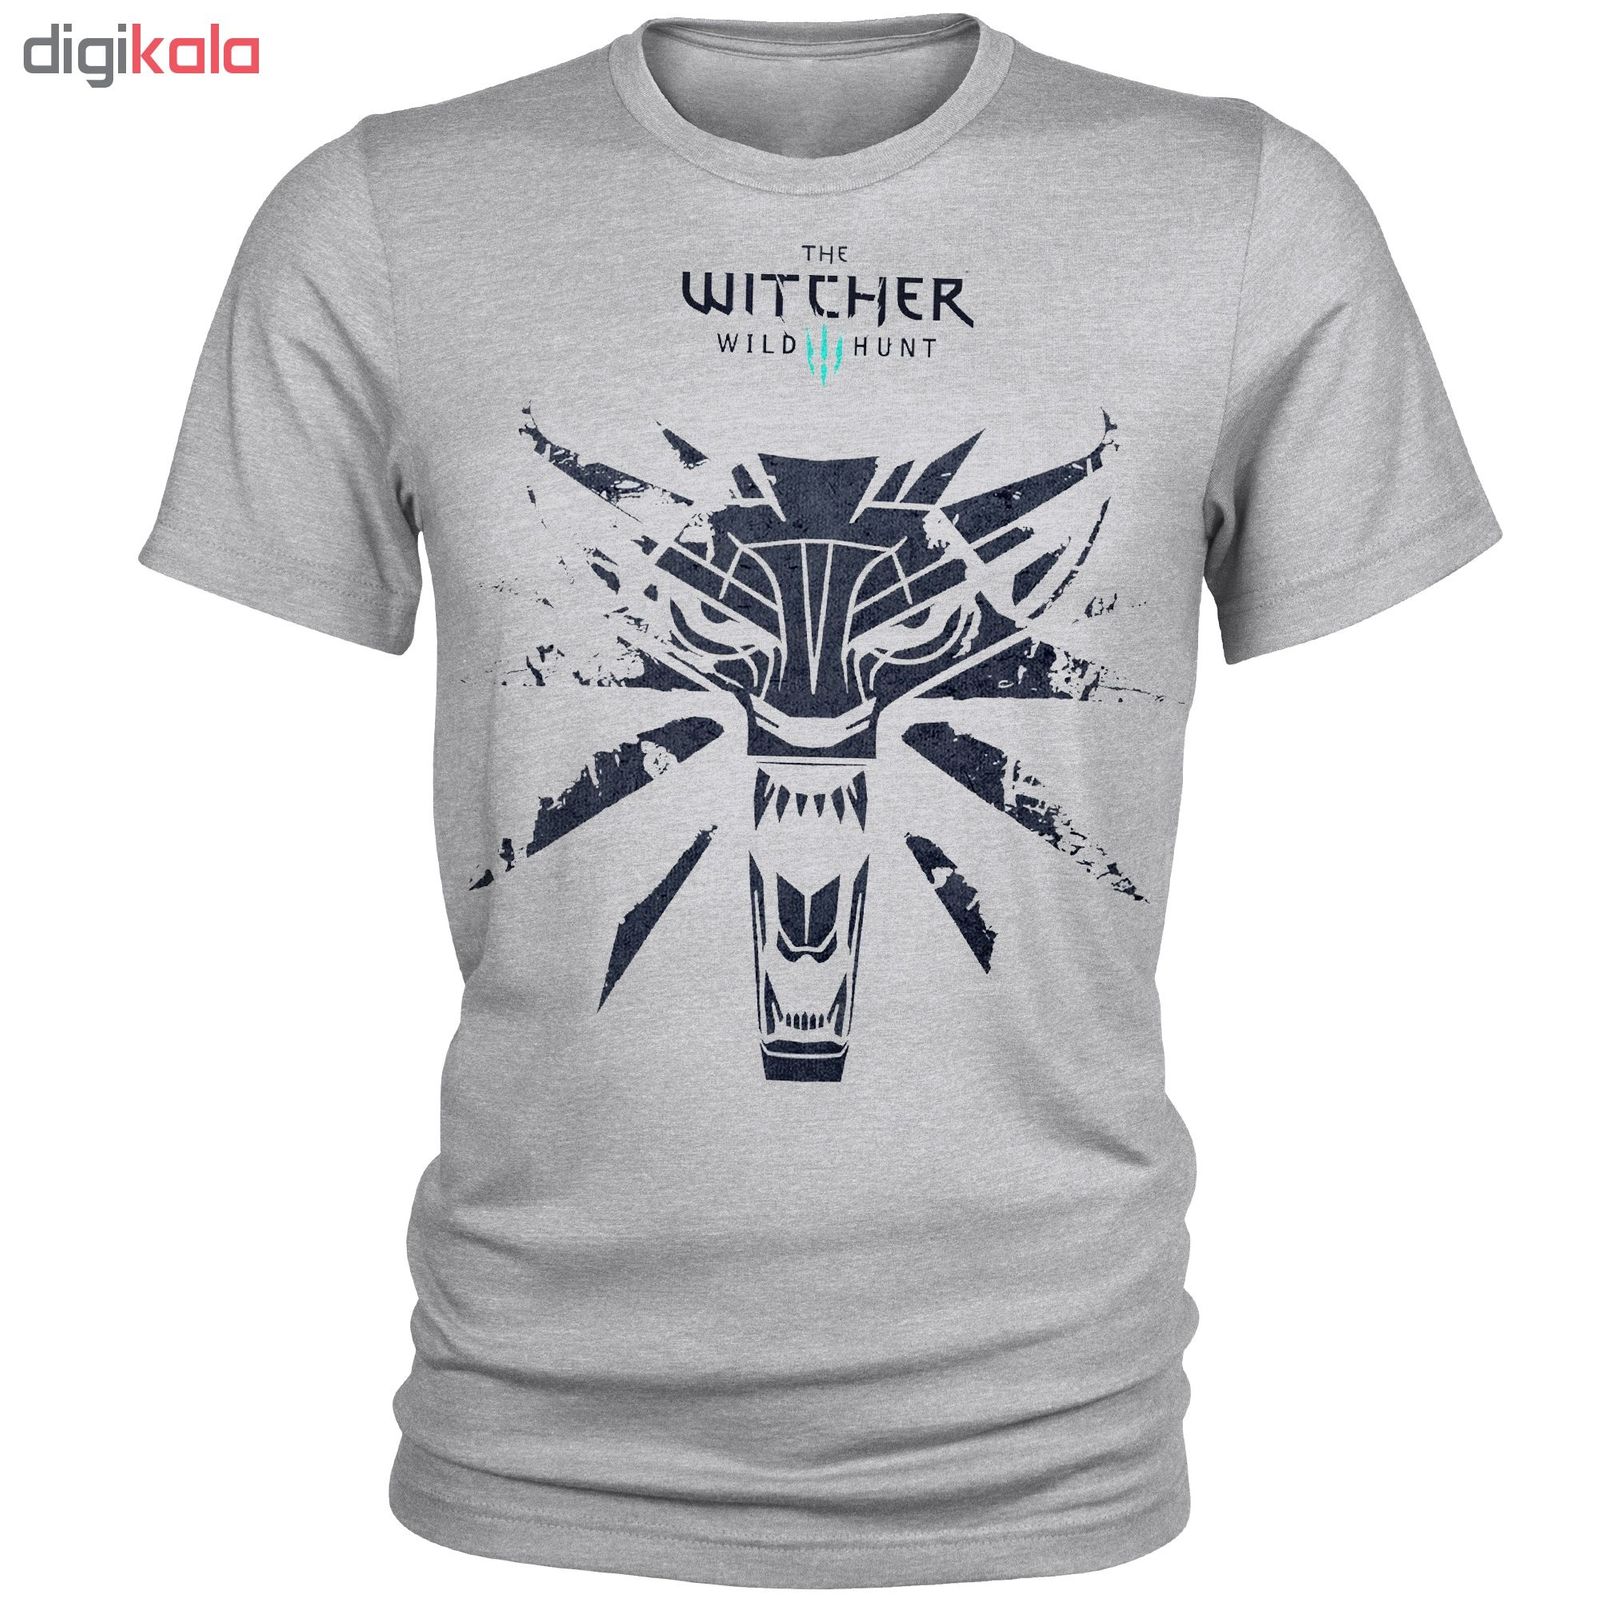 تی شرت مردانه طرح Witcher کد A038